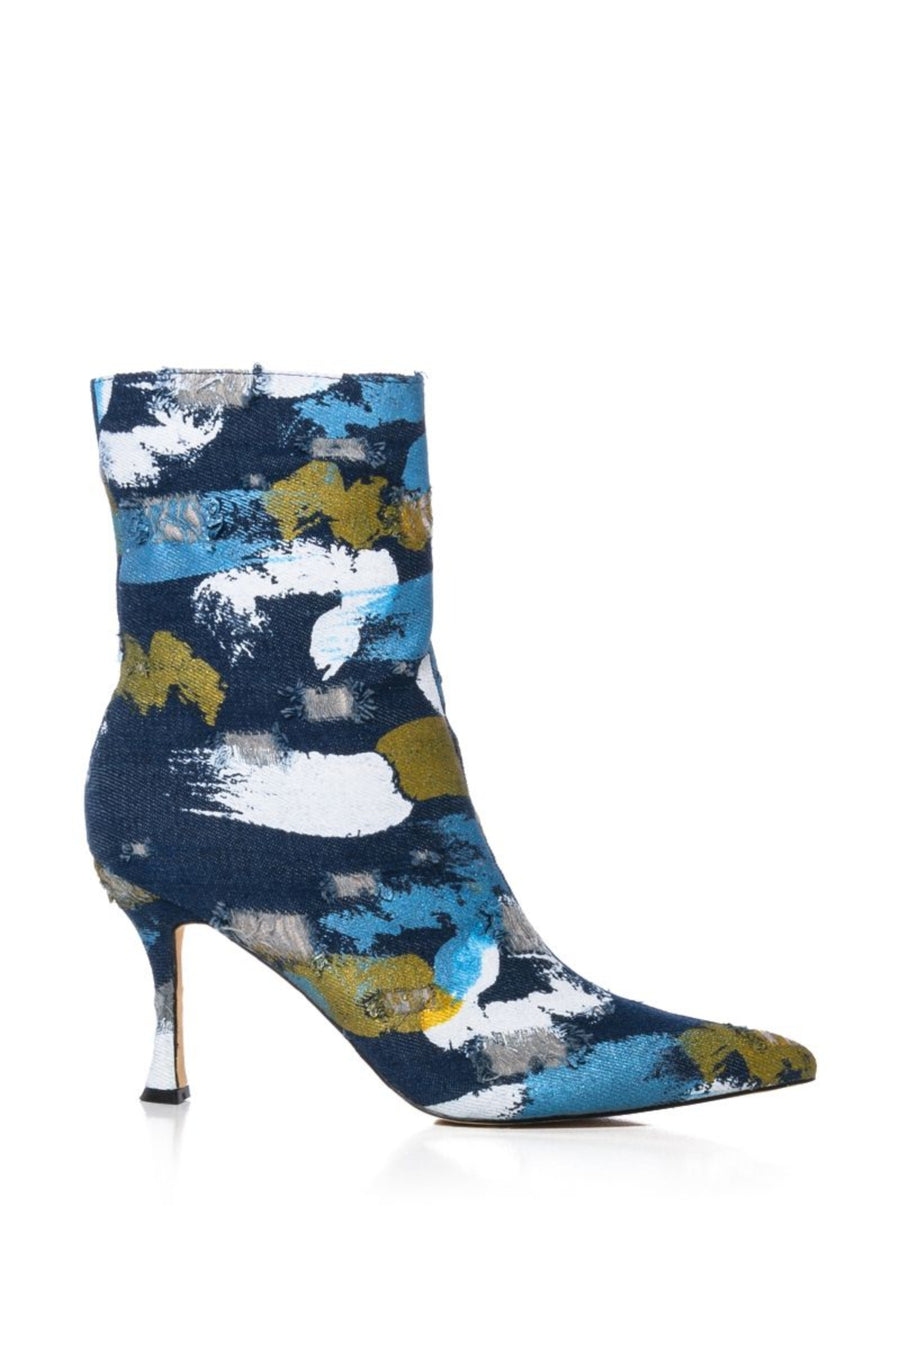 denim stiletto heel boots with paint pattern